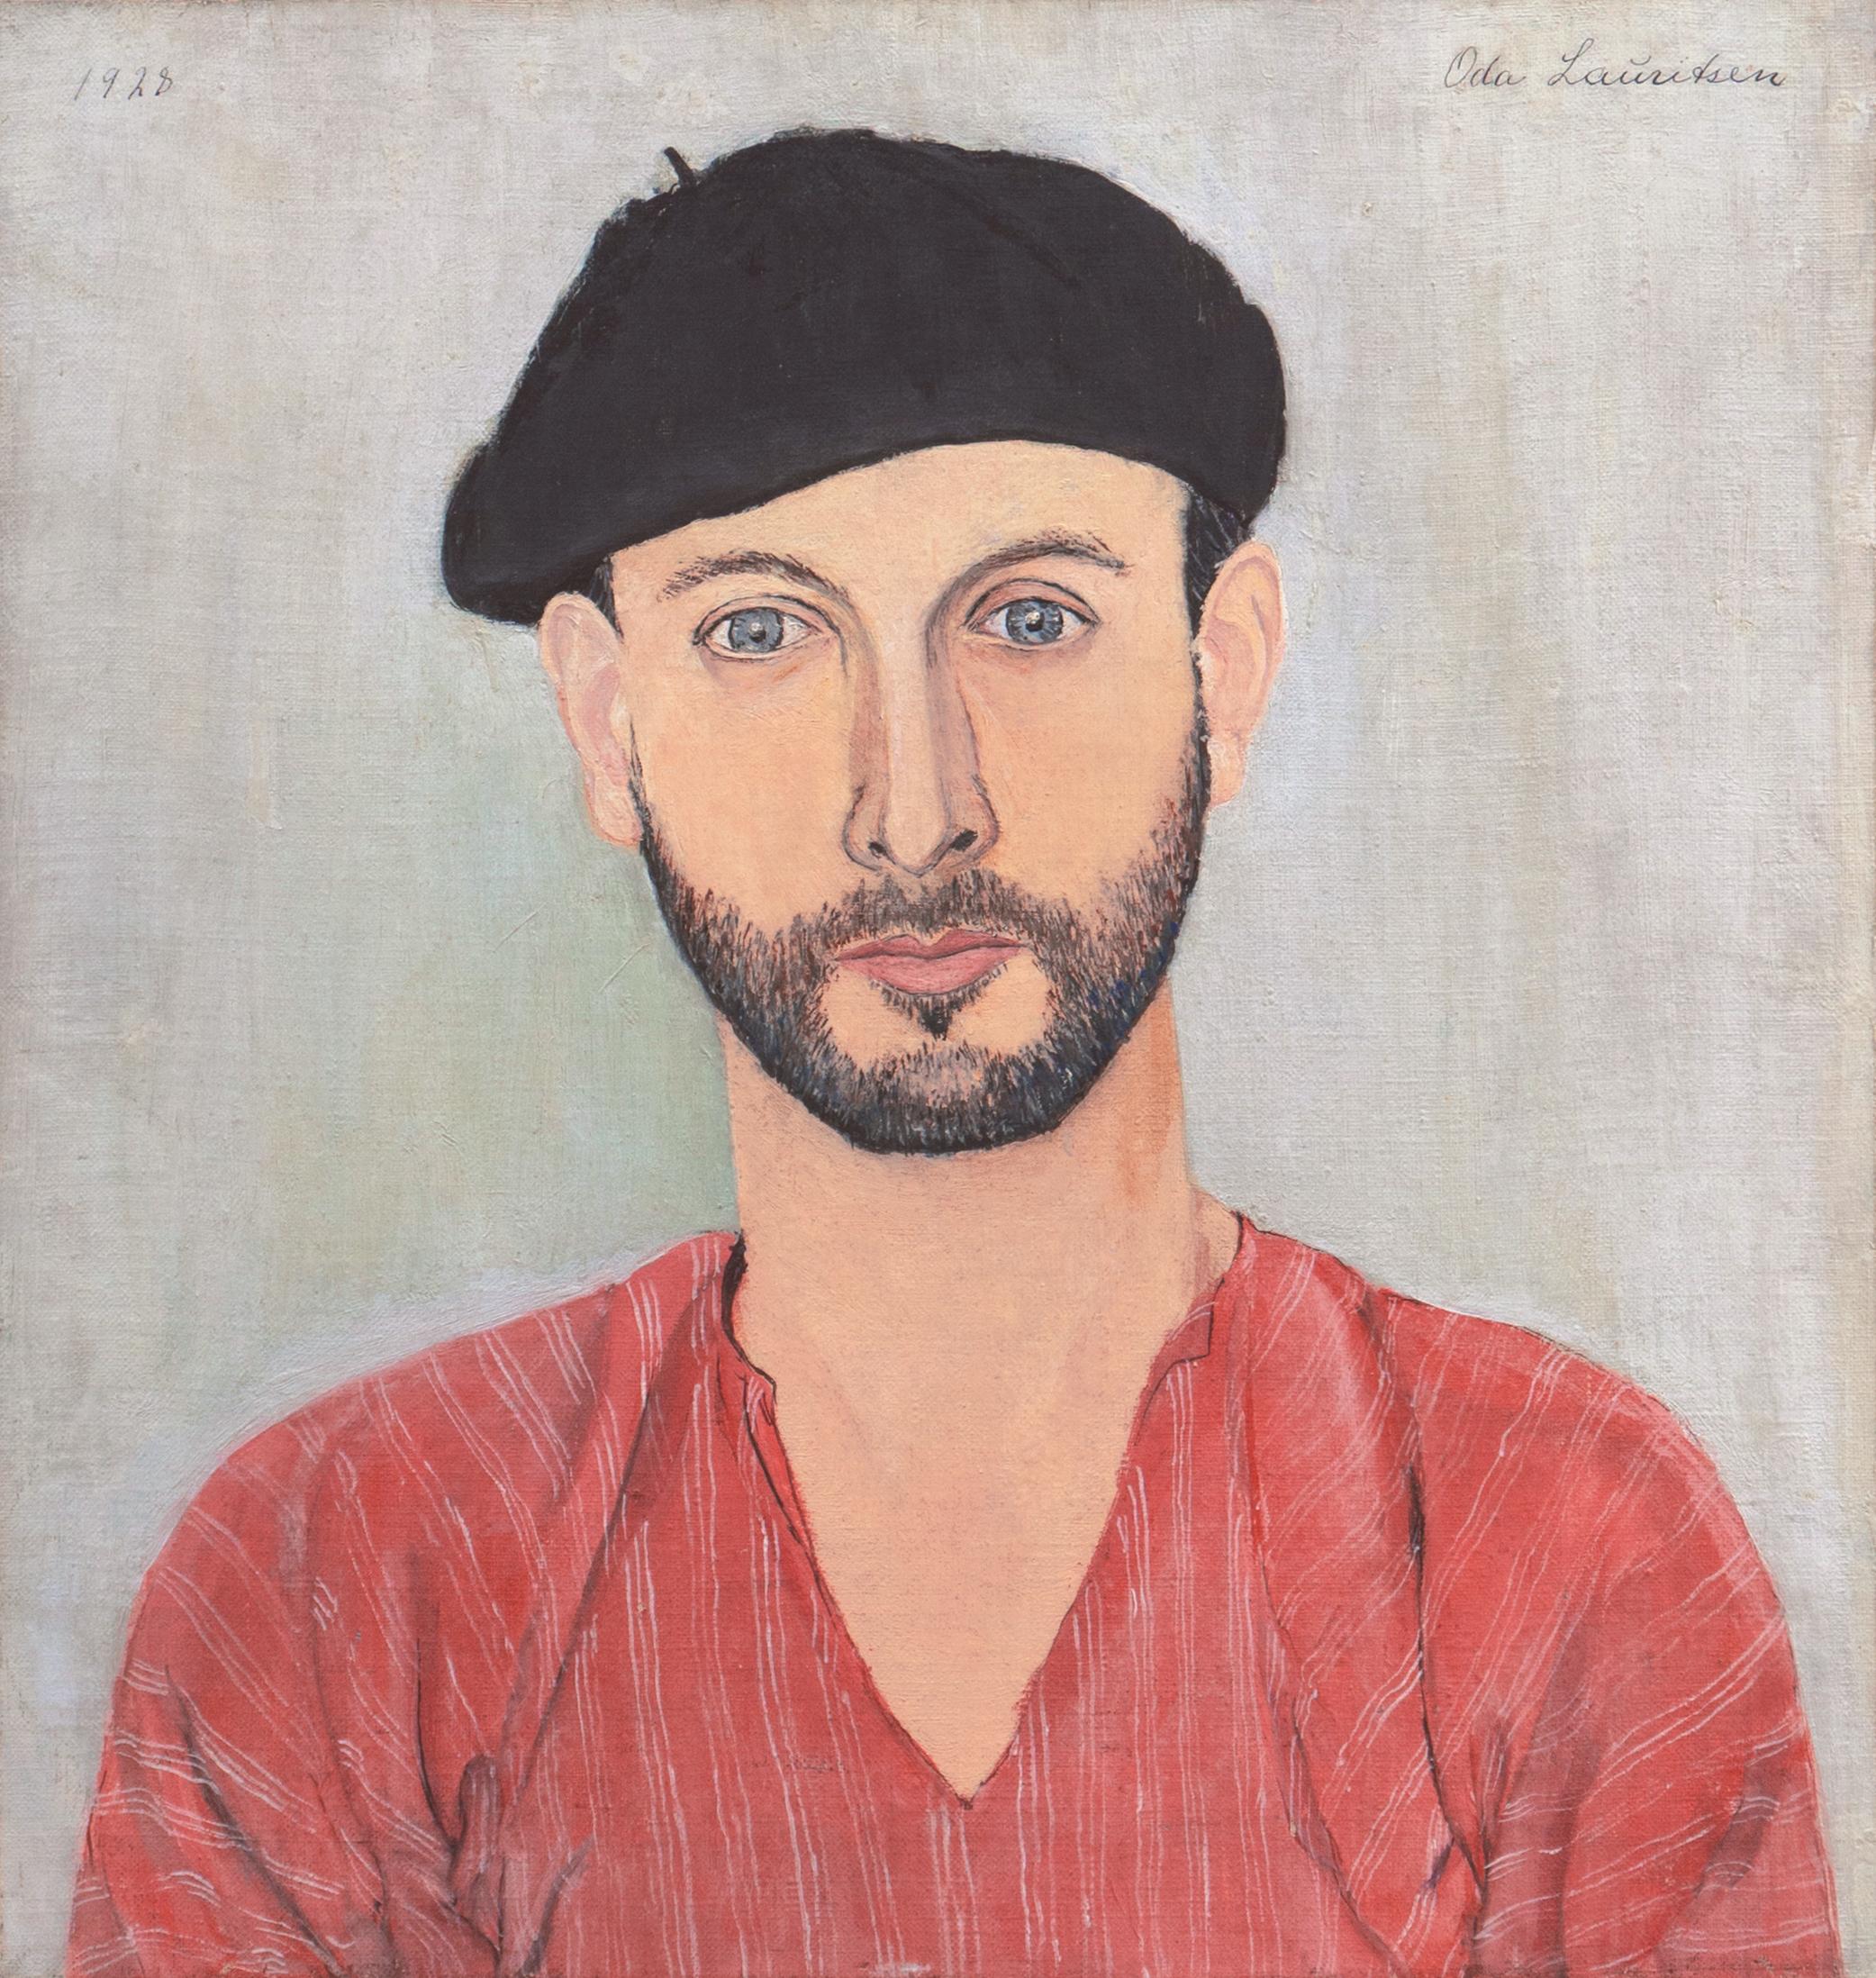 Oda Lauritsen Isbrand Portrait Painting - 'Portrait of the Artist, Victor Isbrand', Paris, Copenhagen, Morocco